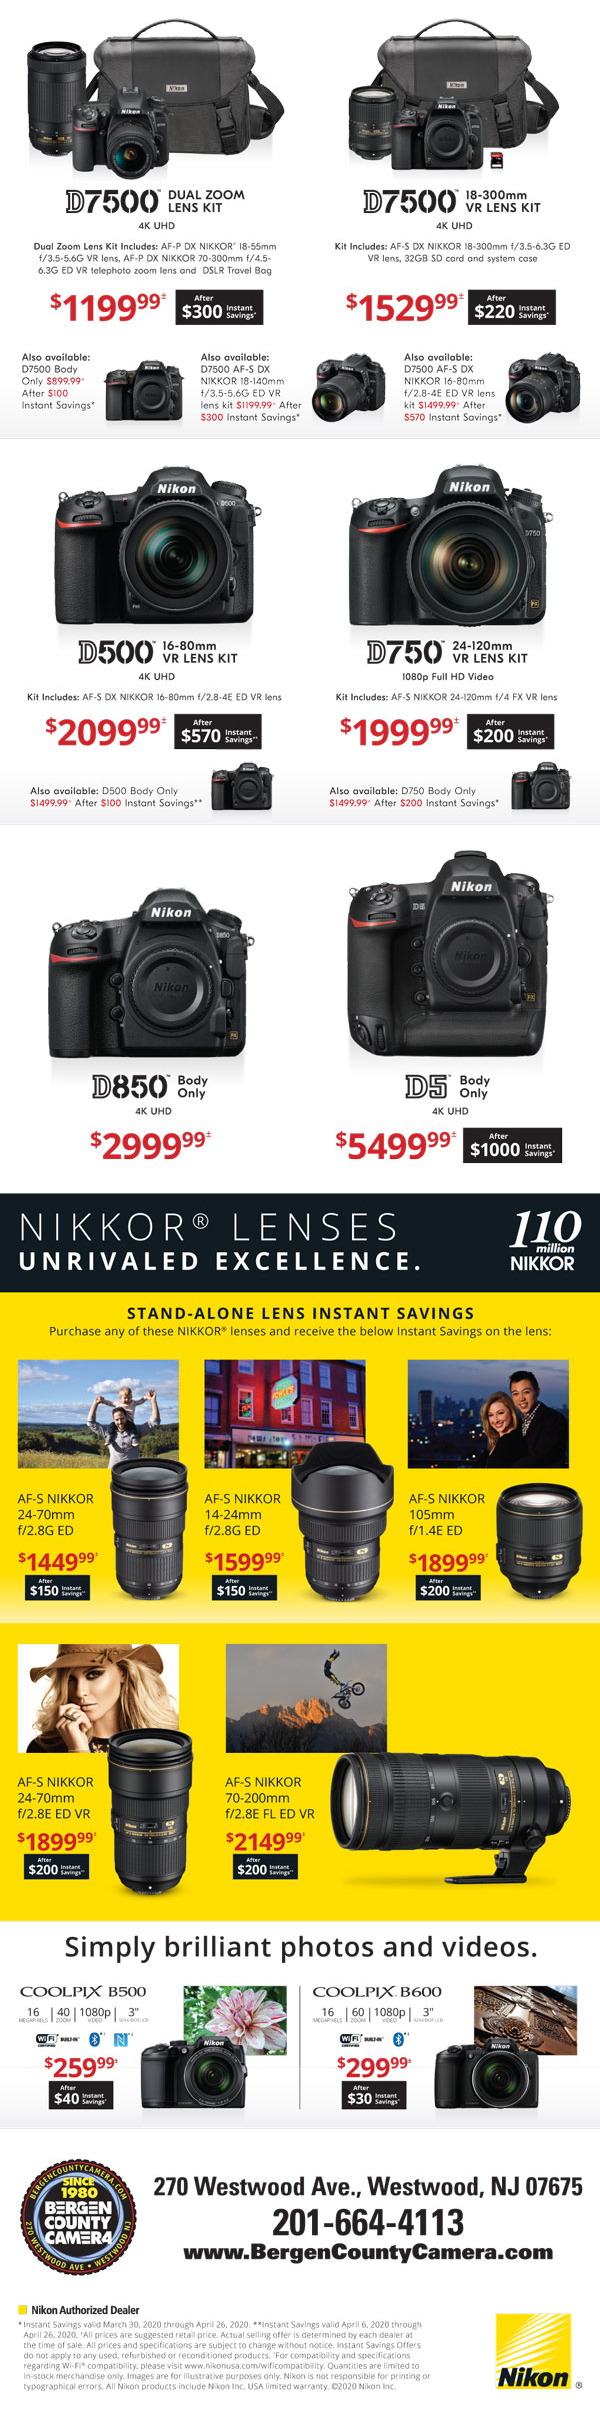 Nikon instant savings part 2